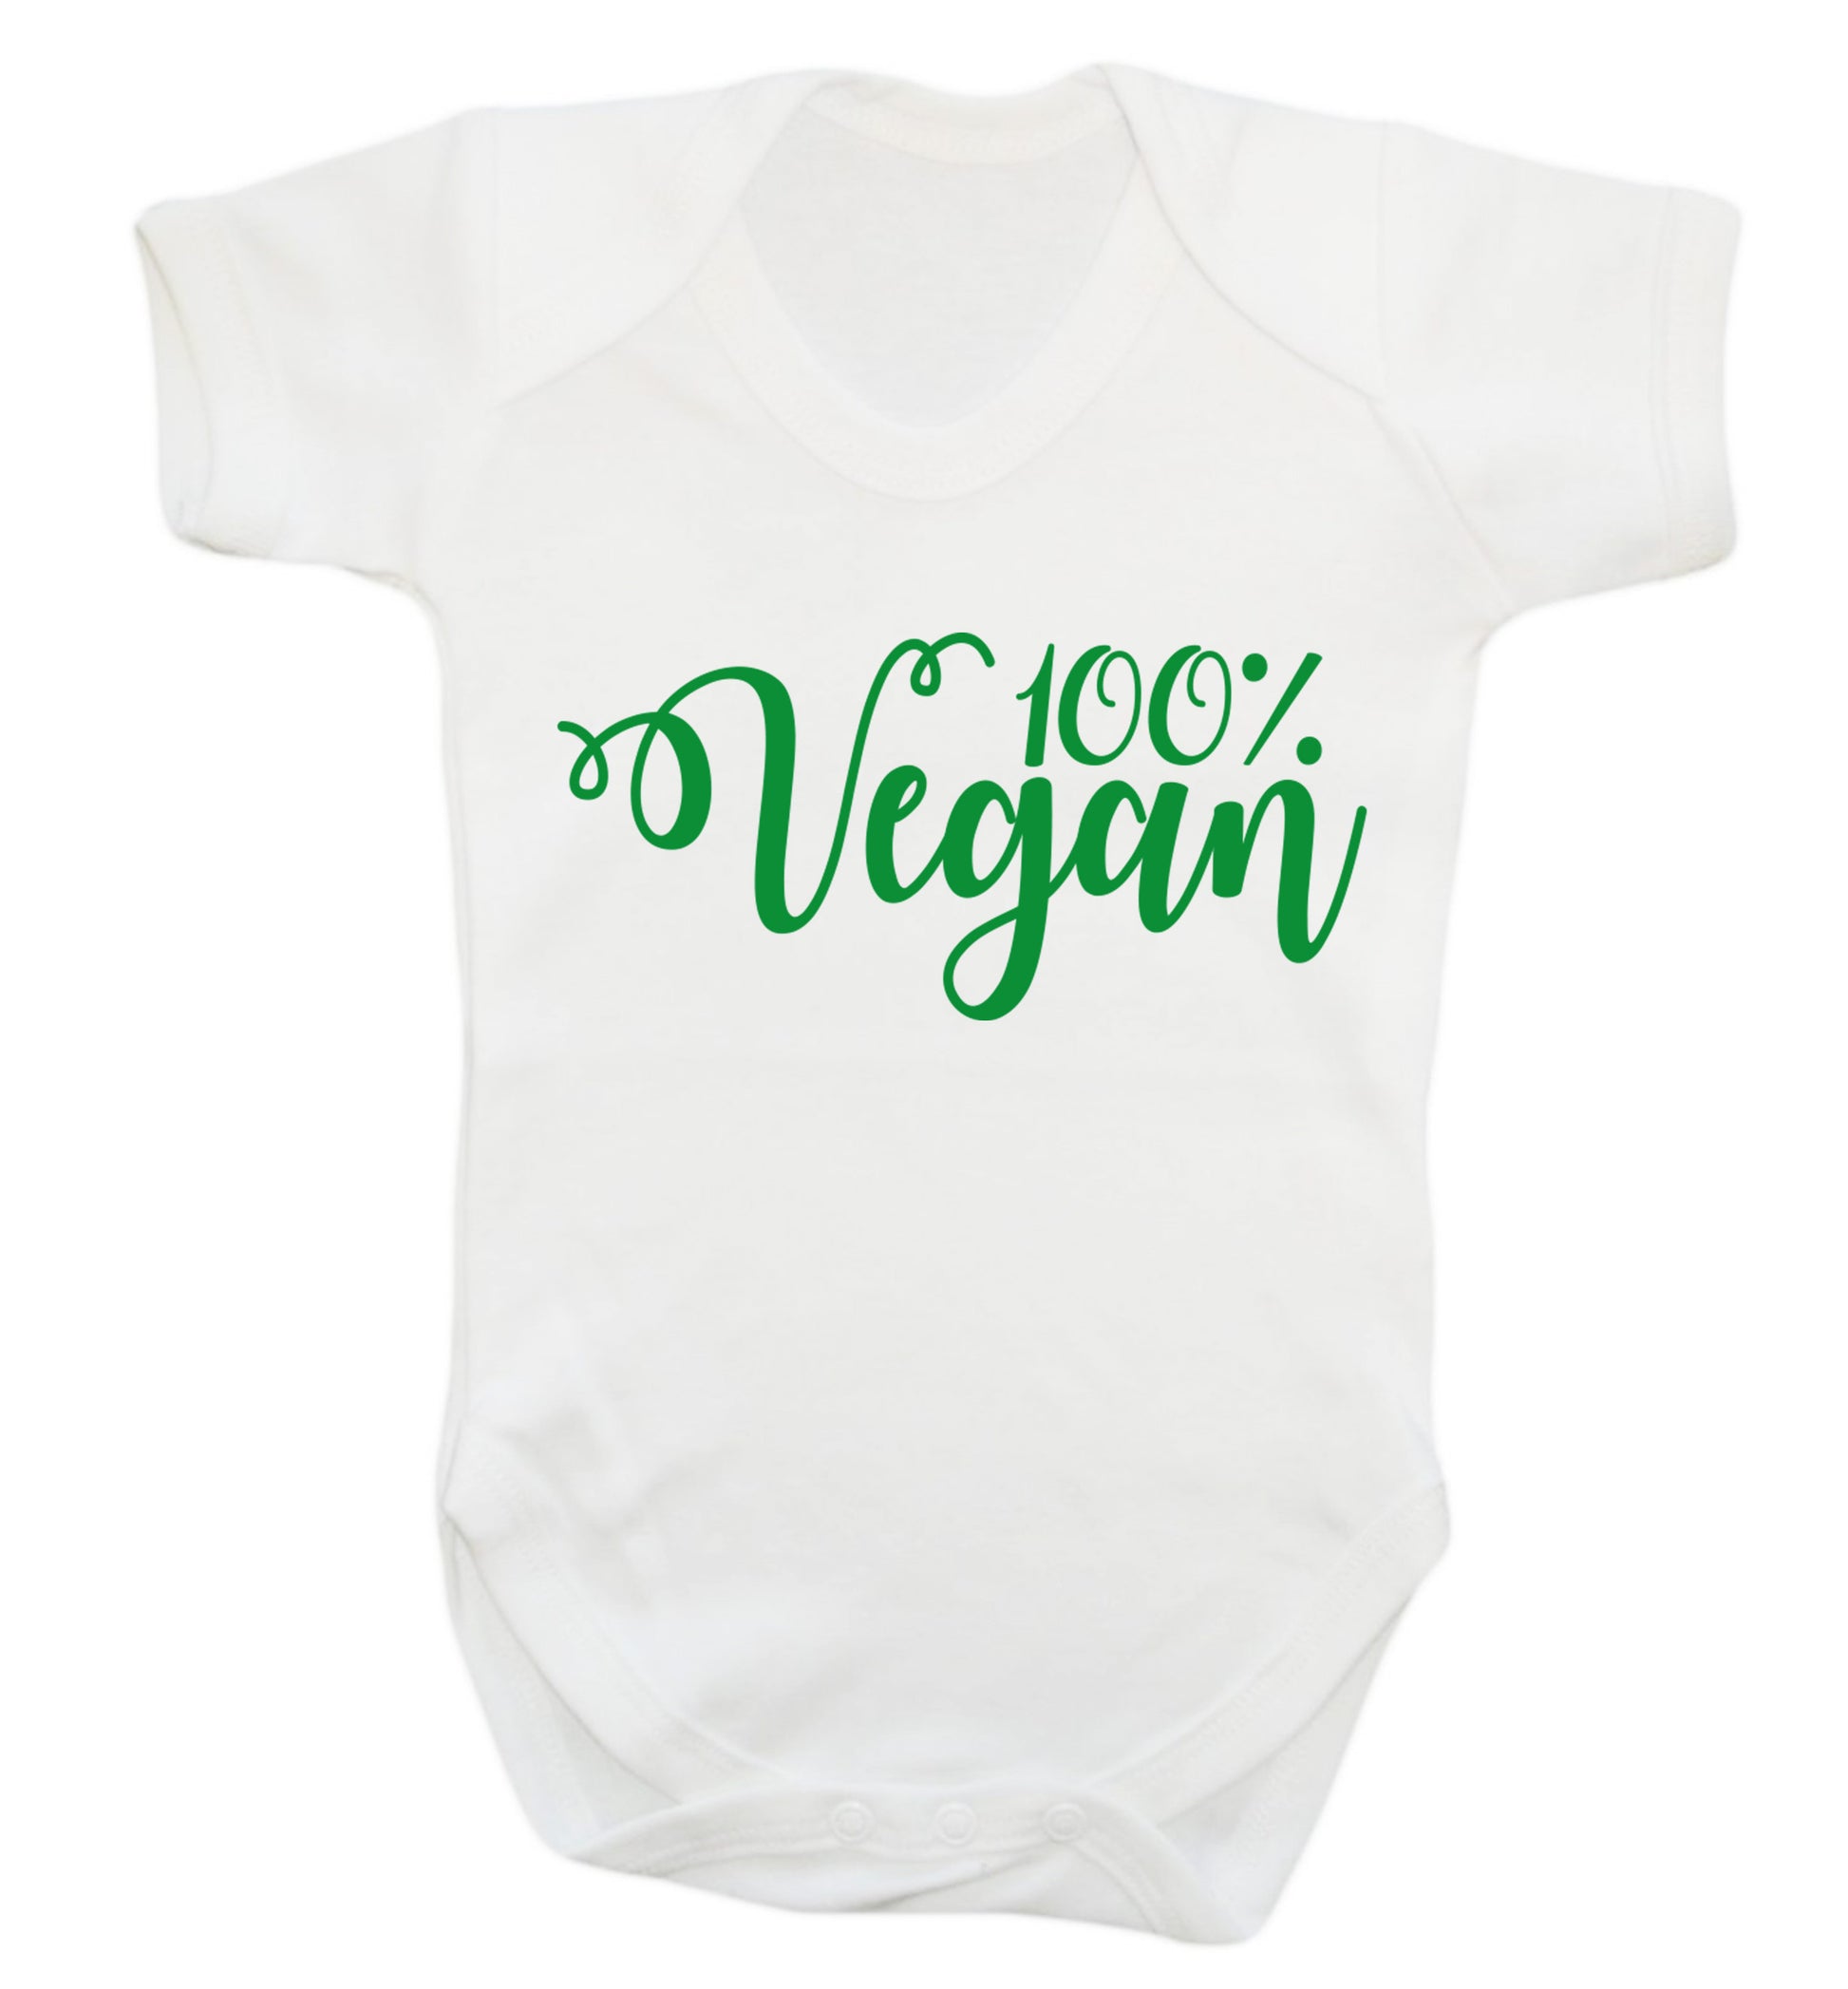 100% Vegan Baby Vest white 18-24 months